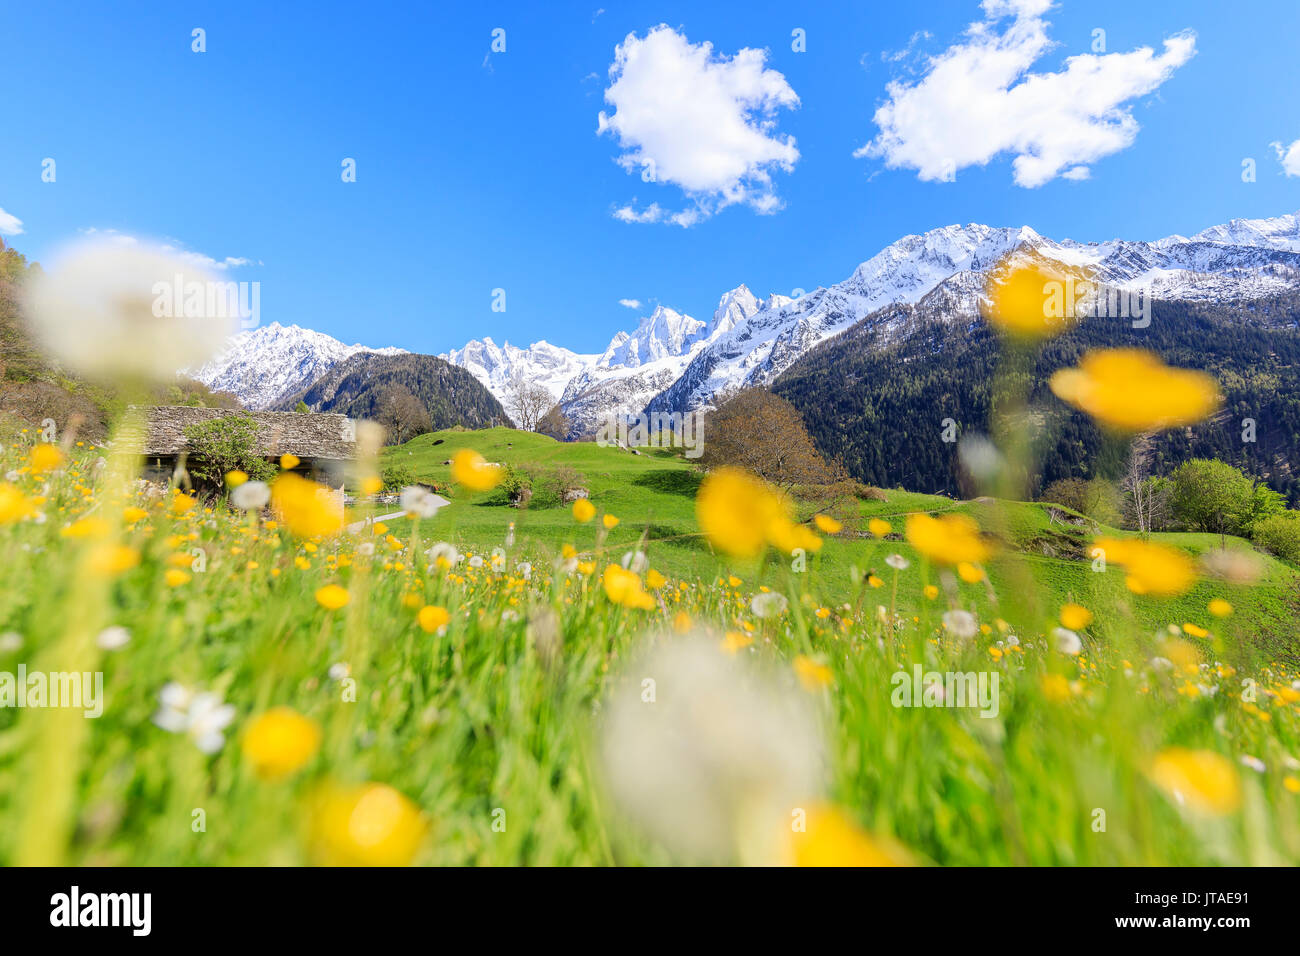 Dandelions and flowers framed by snowy peaks, Soglio, Maloja, Bregaglia Valley, Engadine, canton of Graubunden, Switzerland Stock Photo